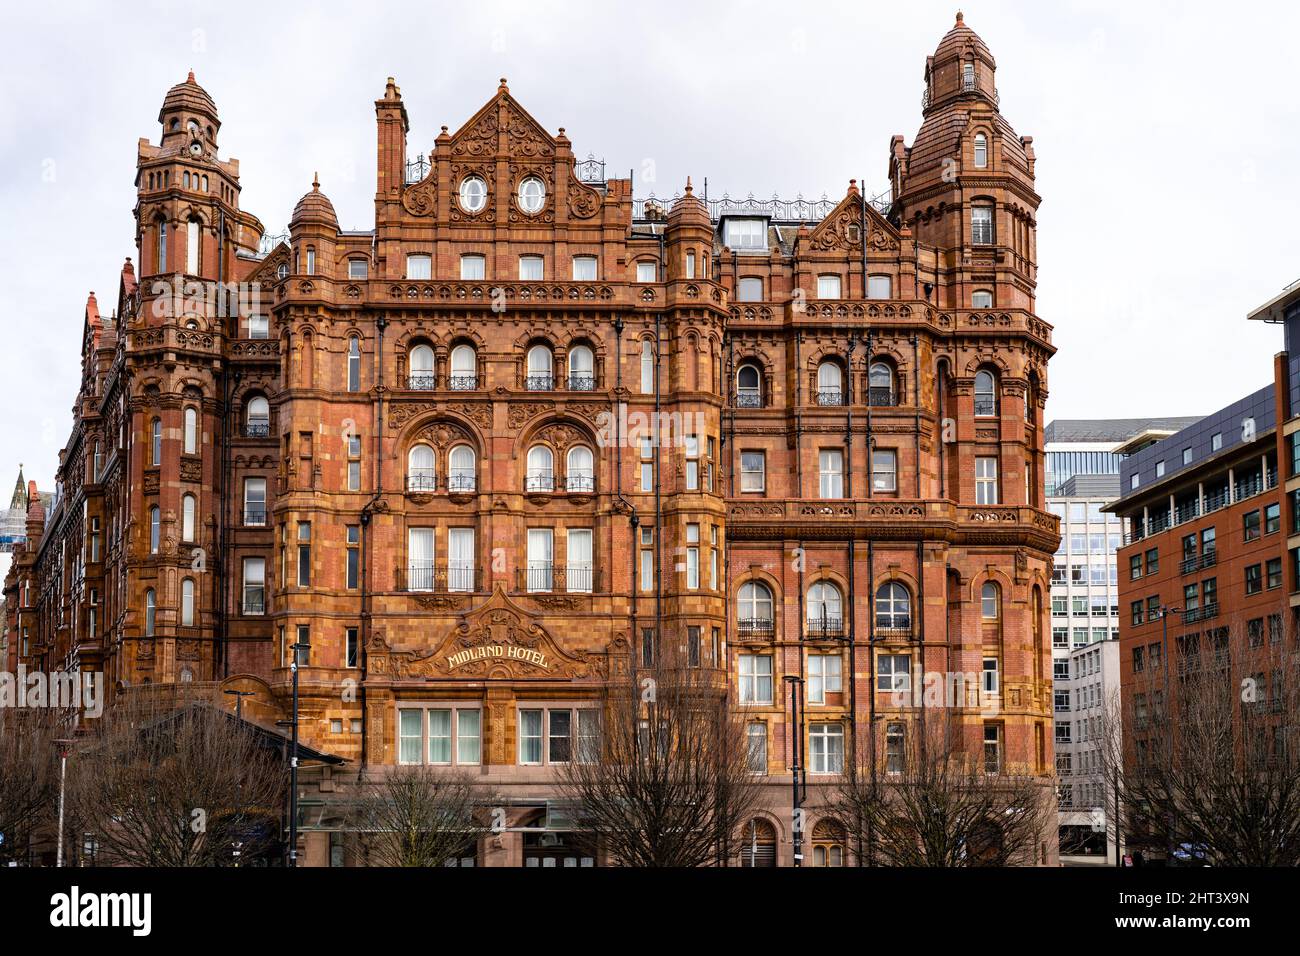 Midland hotel Manchester city centre famous gothic landmark building luxury hotel Stock Photo